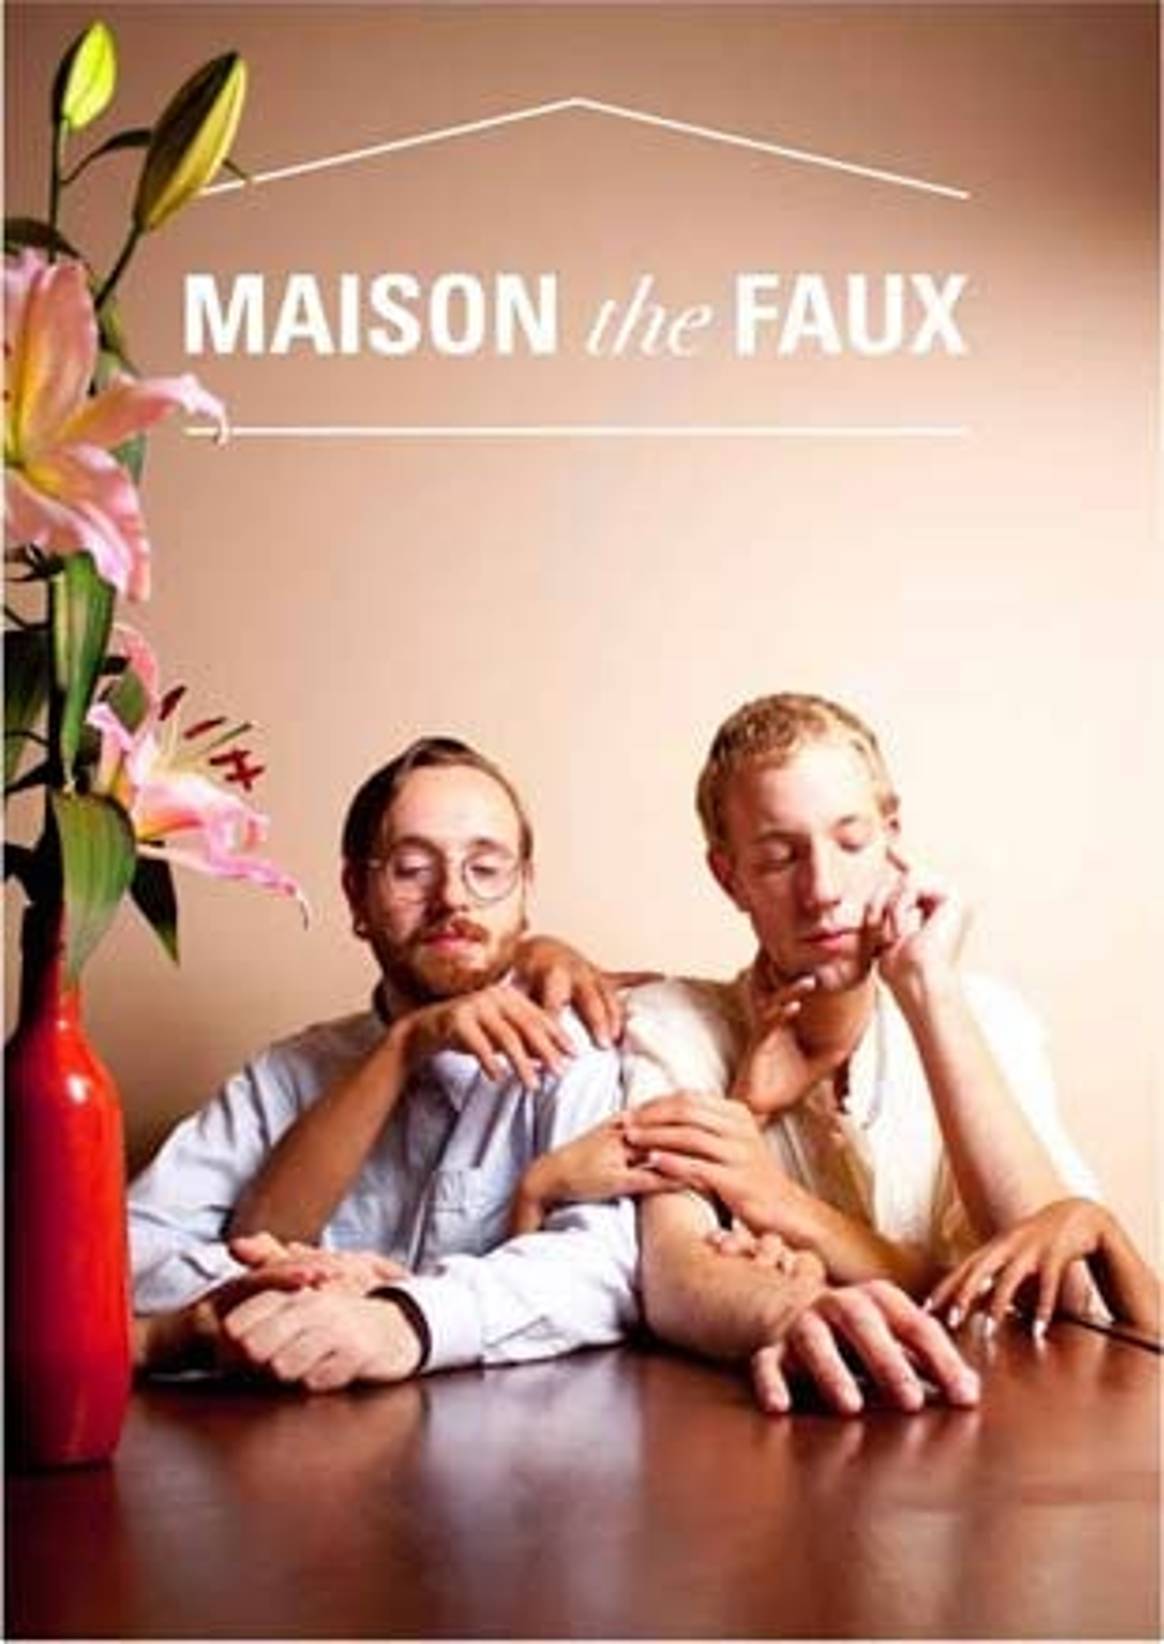 AFW: Maison the Faux vervaagt man-vrouwgrenzen